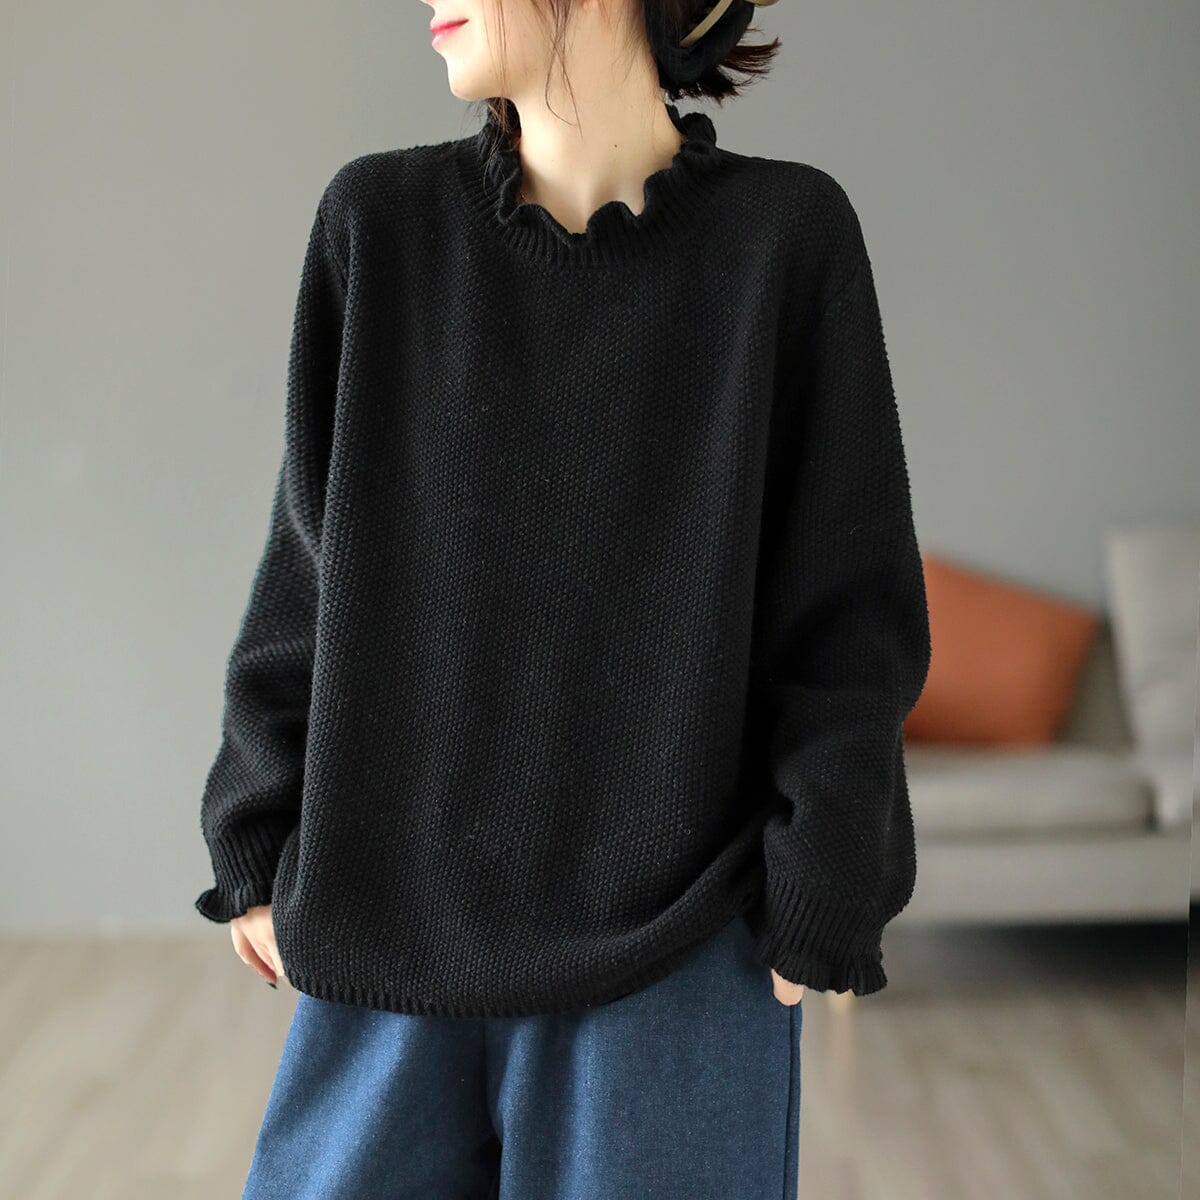 Retro Ruffle Collar Cotton Knitted Sweater